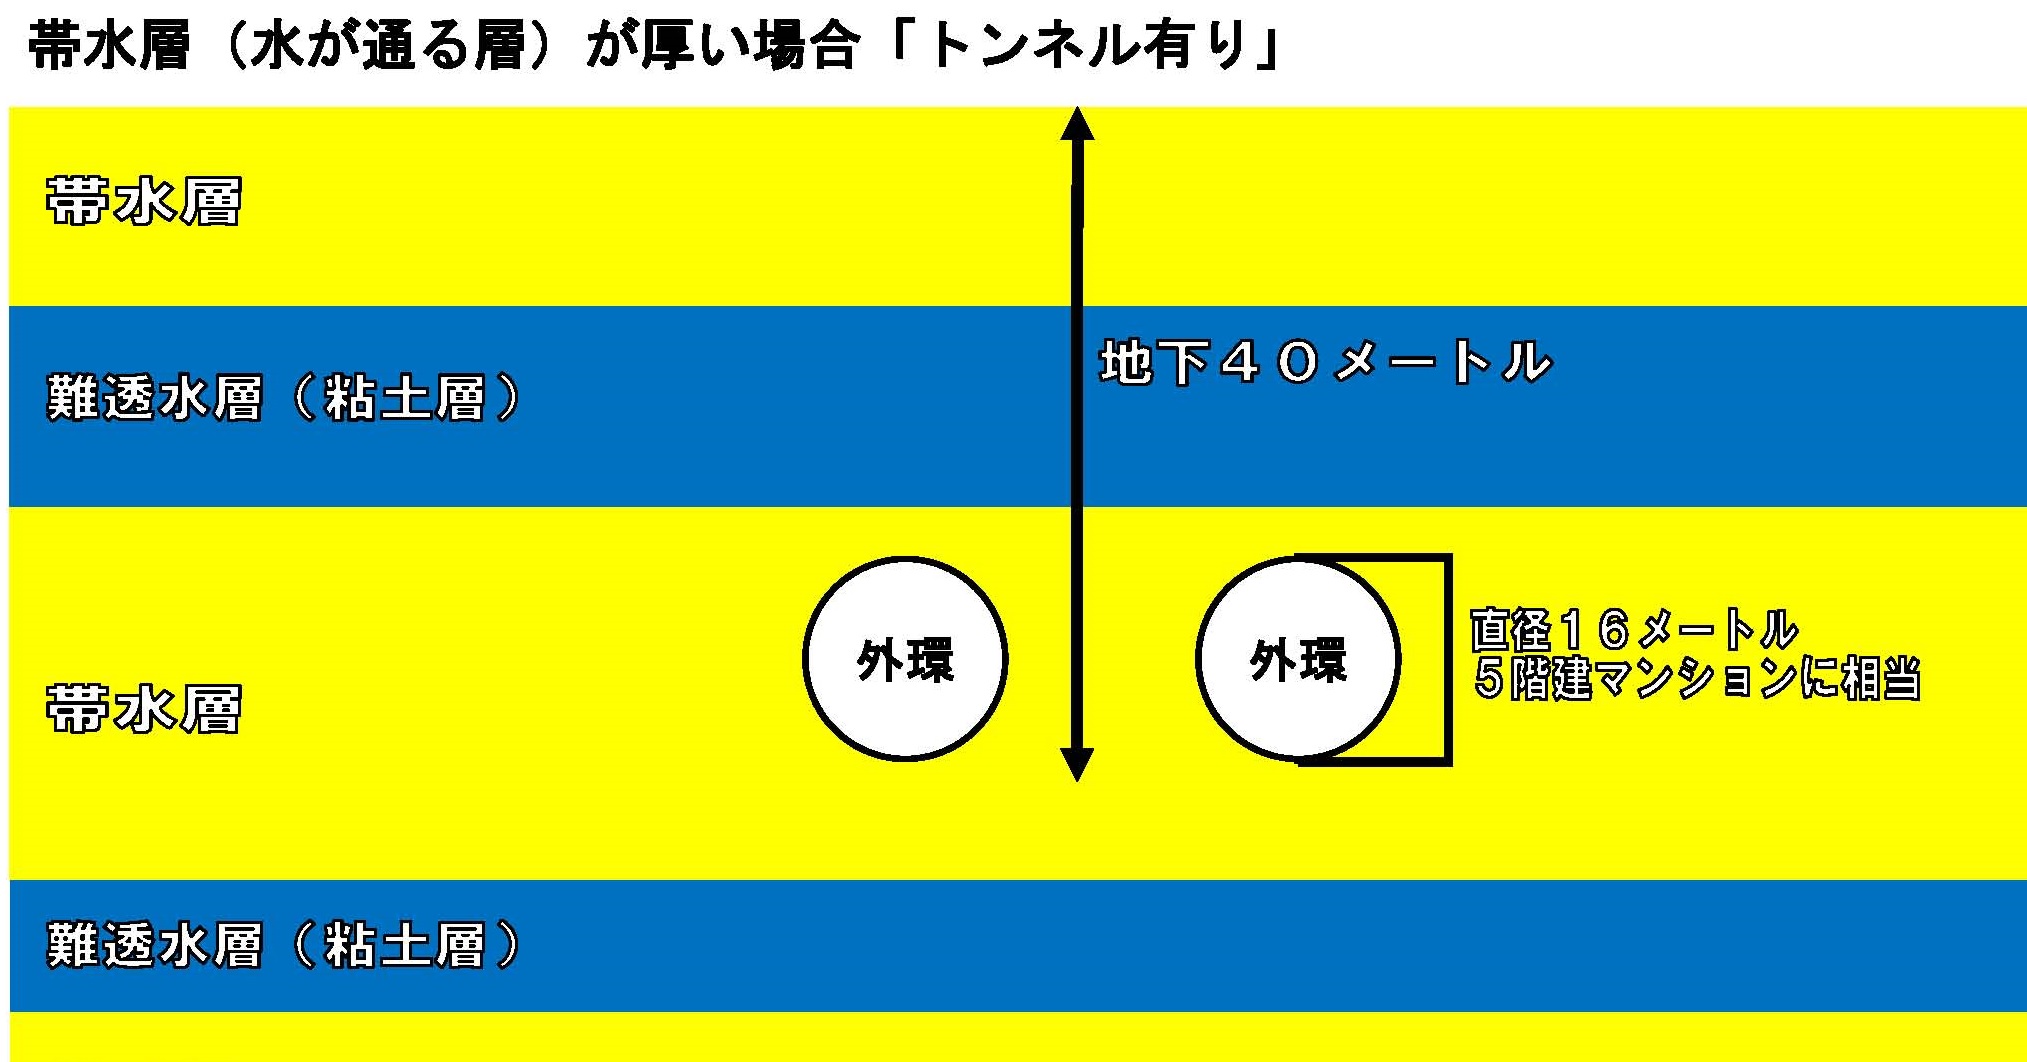 http://yamadakohei.jp/blog_upfile/%E5%B8%AF%E6%B0%B4%E5%B1%A4%E8%B3%87%E6%96%991.jpg